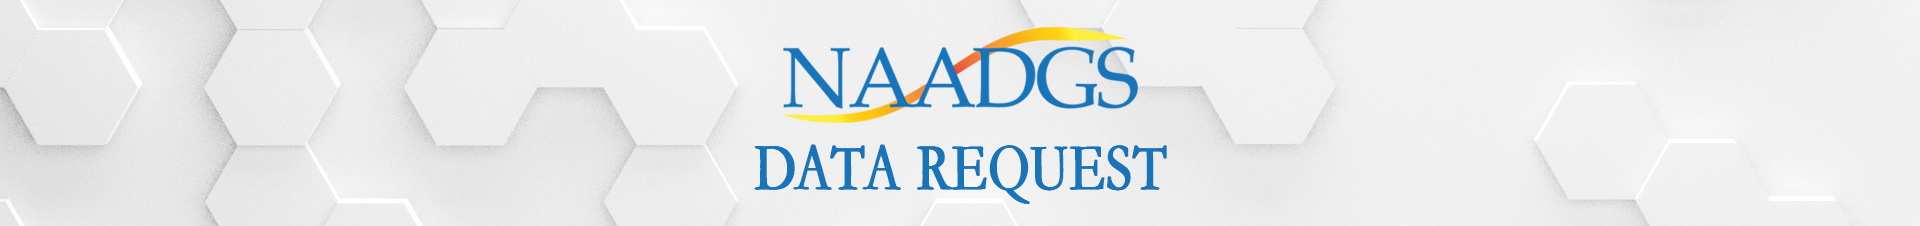 NAADGS Data Request Form Header